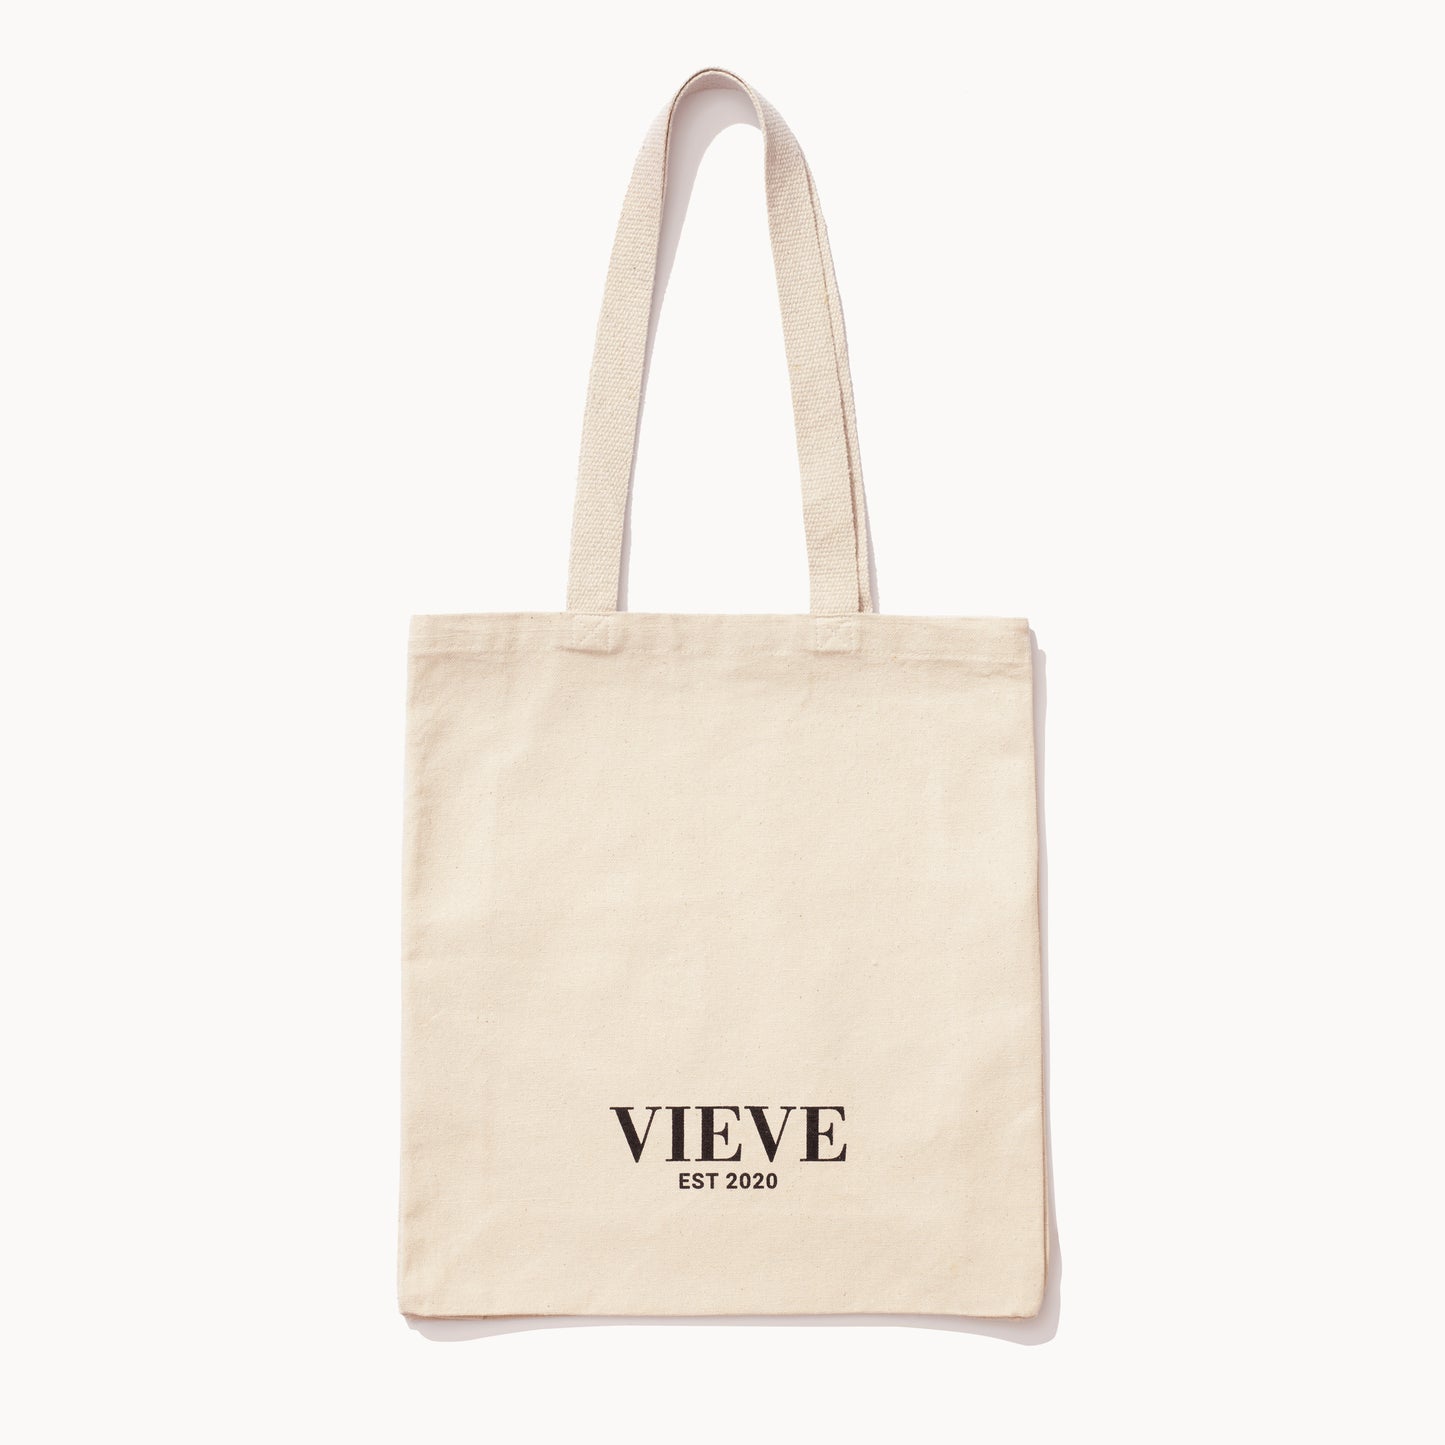 VIEVE Tote Bag